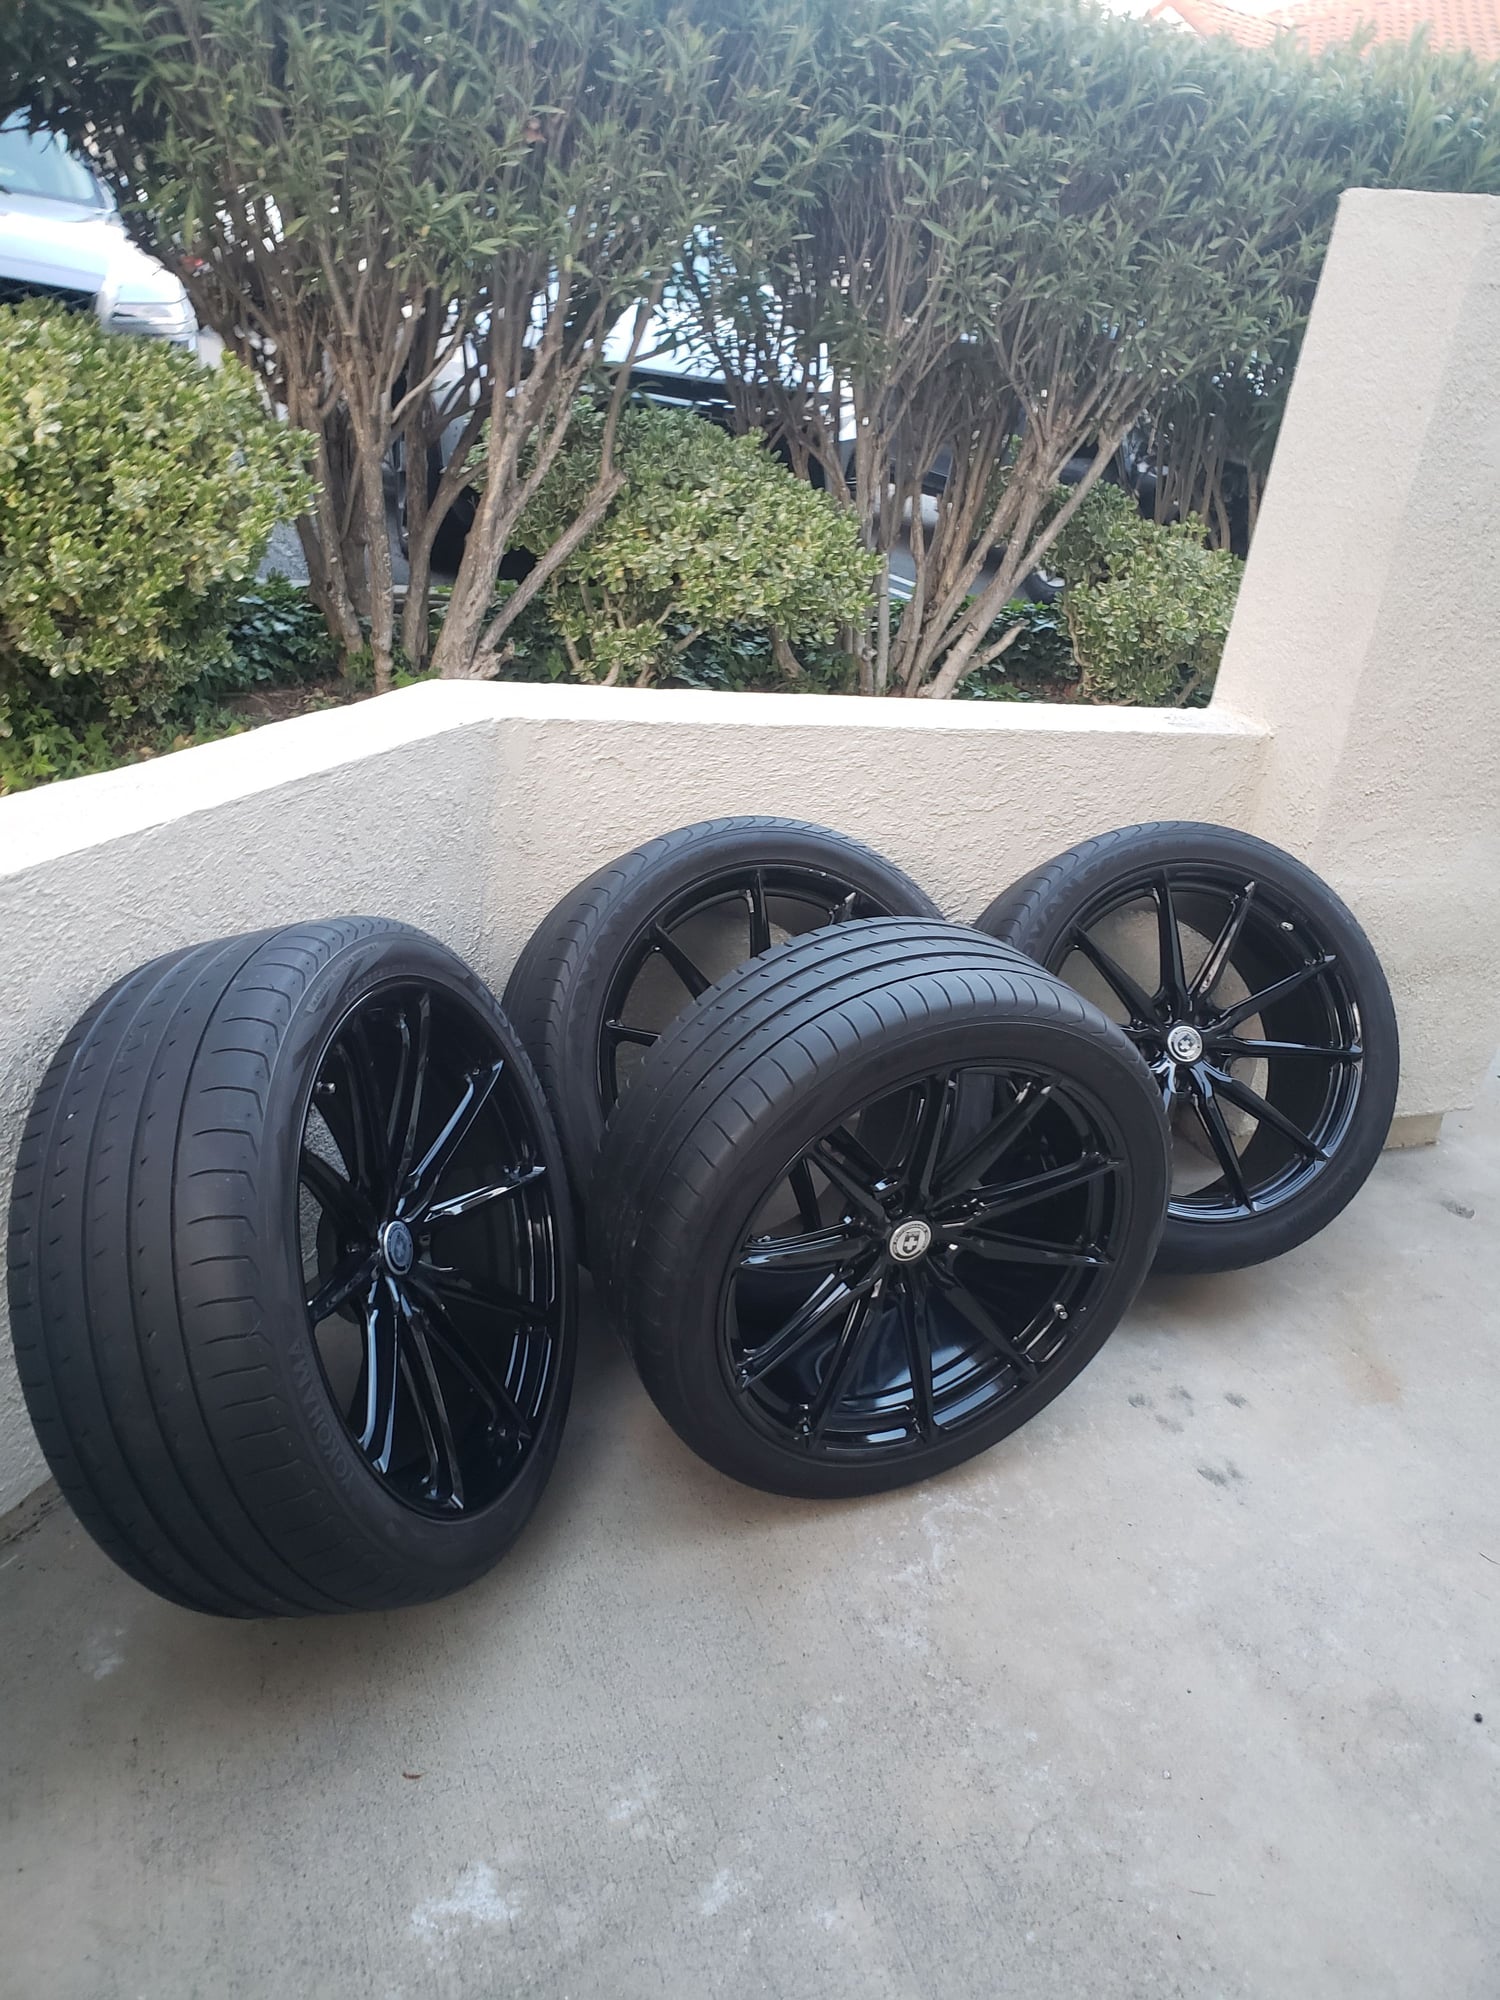 Wheels and Tires/Axles - 23" HRE/ YOKOHAMA TIRES 5X130 GWAGON - Used - All Years Mercedes-Benz GL320 - Agoura Hills, CA 91301, United States